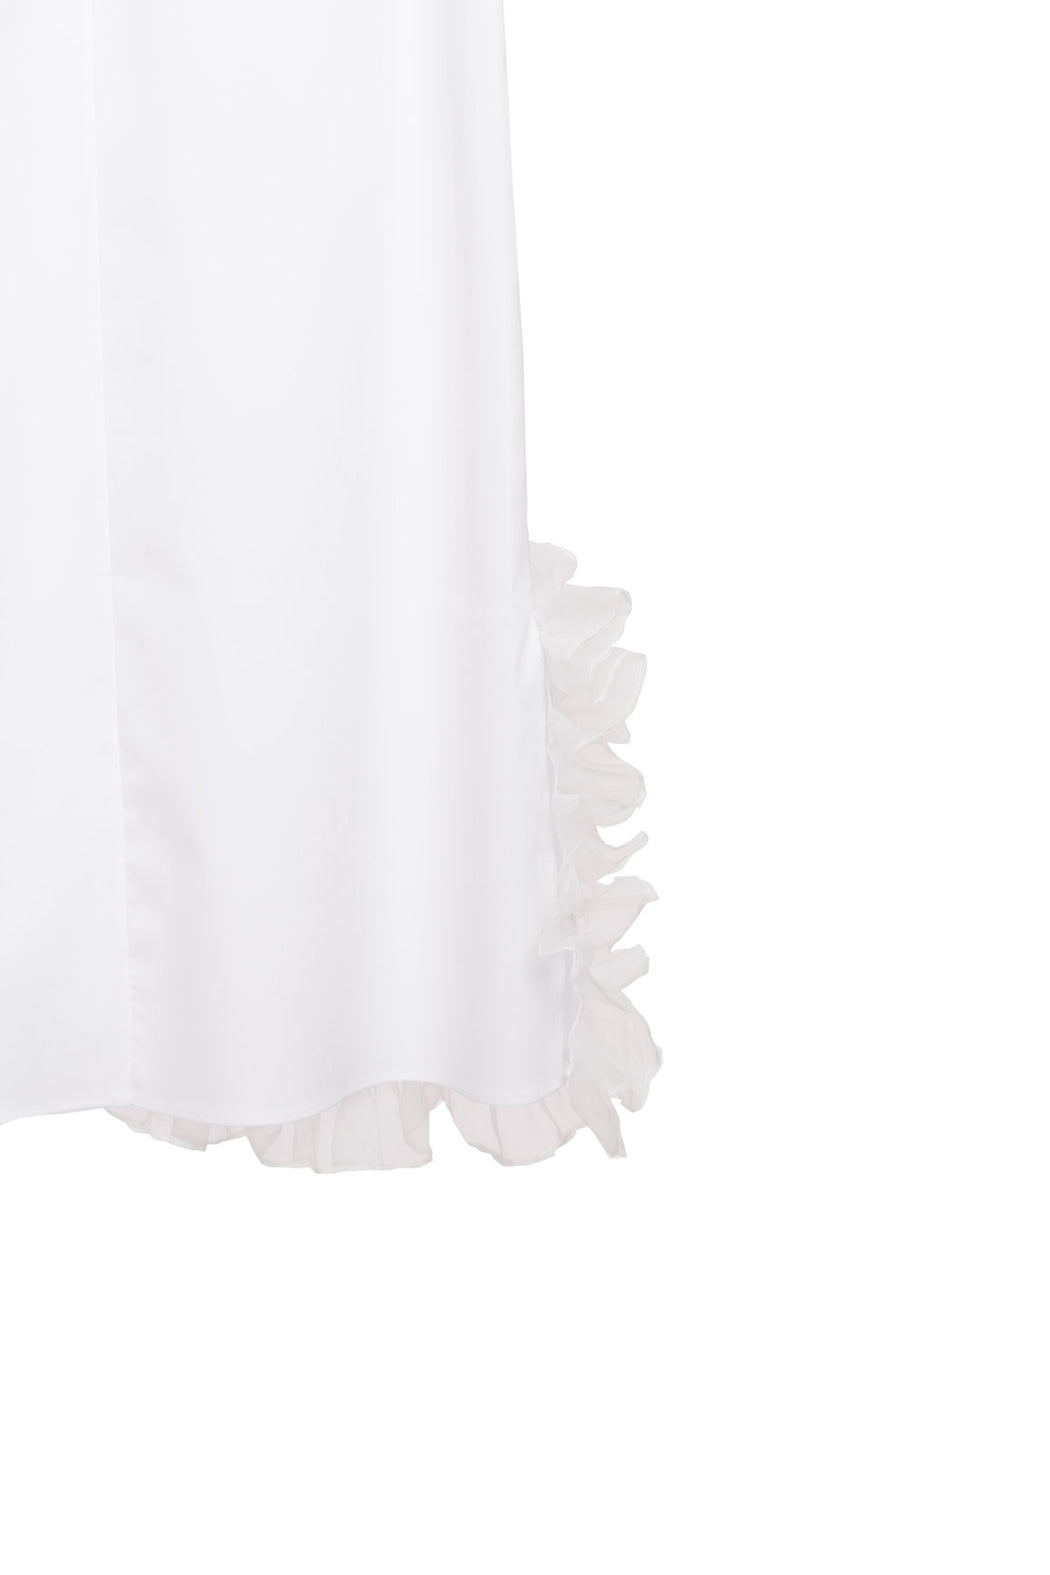 Sleeveless Frill Shirt - White